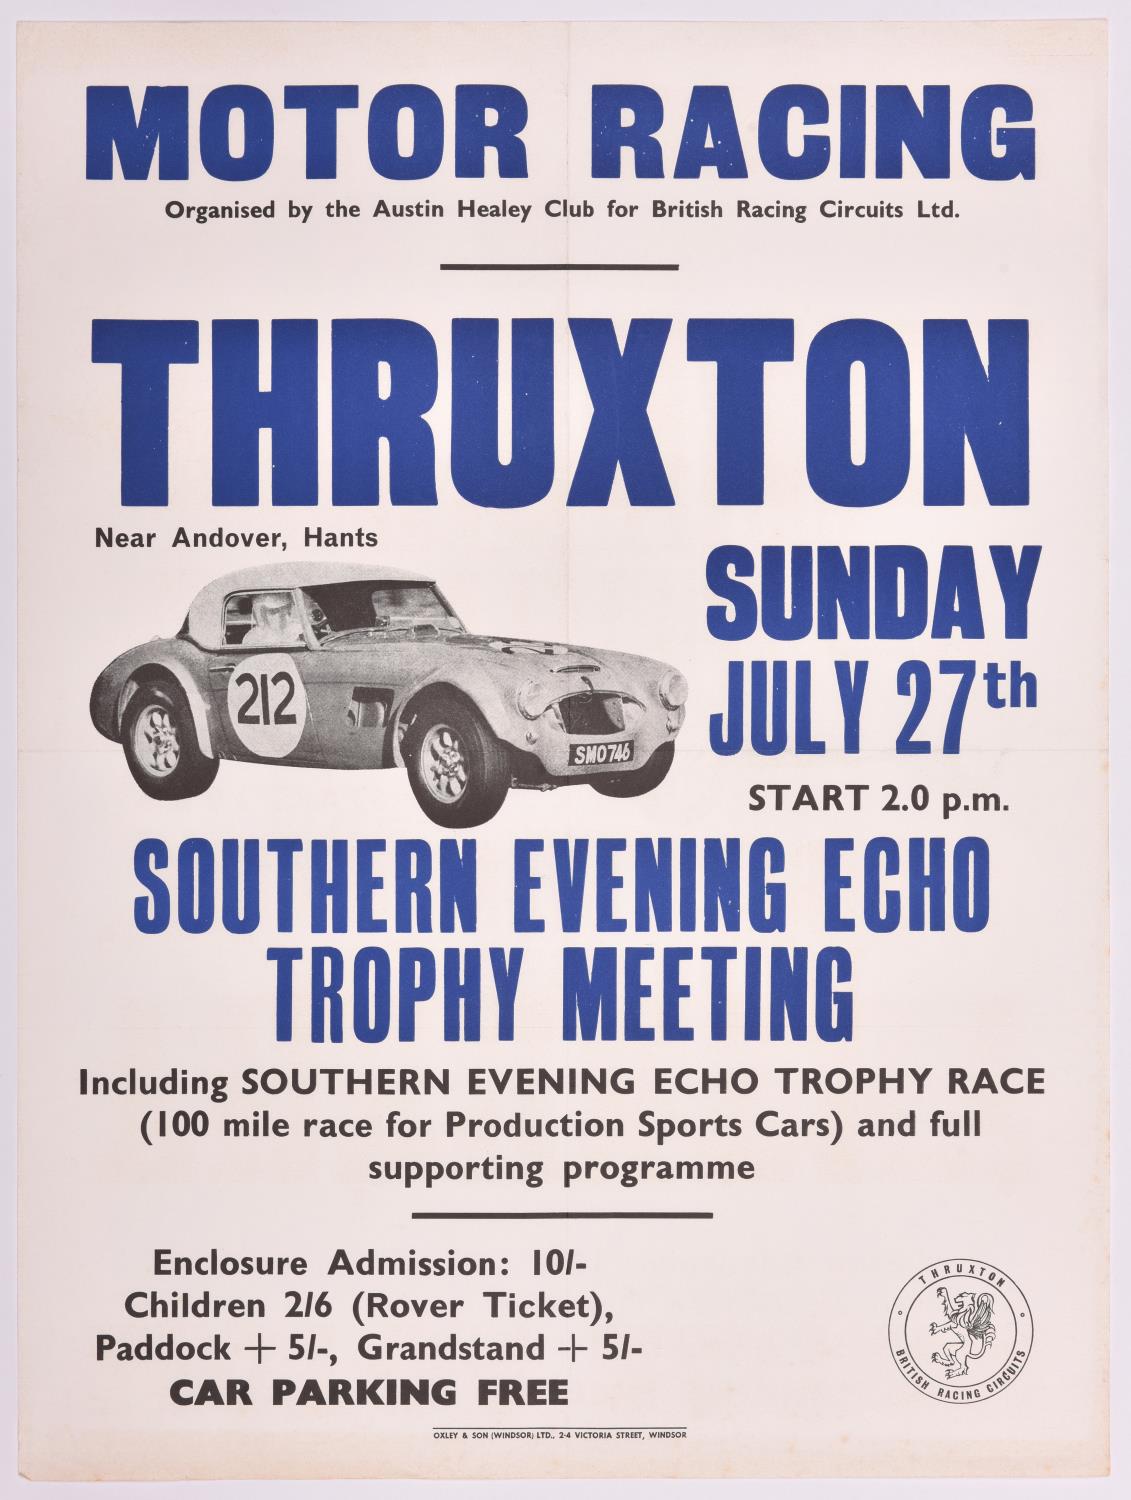 A rare original mid 1960's motor racing poster. 'Motor Racing THRUXTON Sunday July 27th Southern